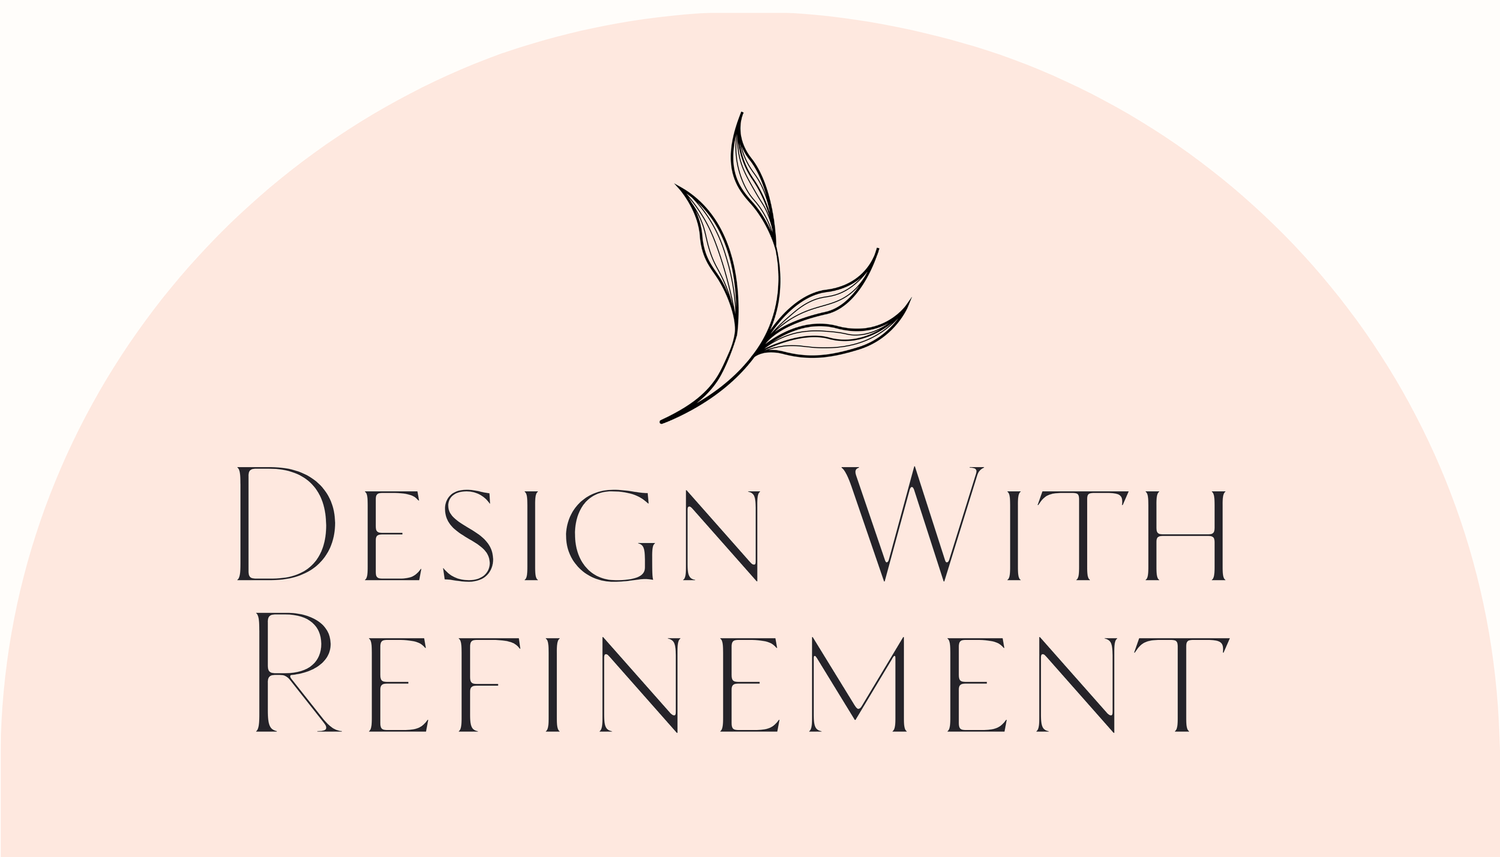 Design With Refinement